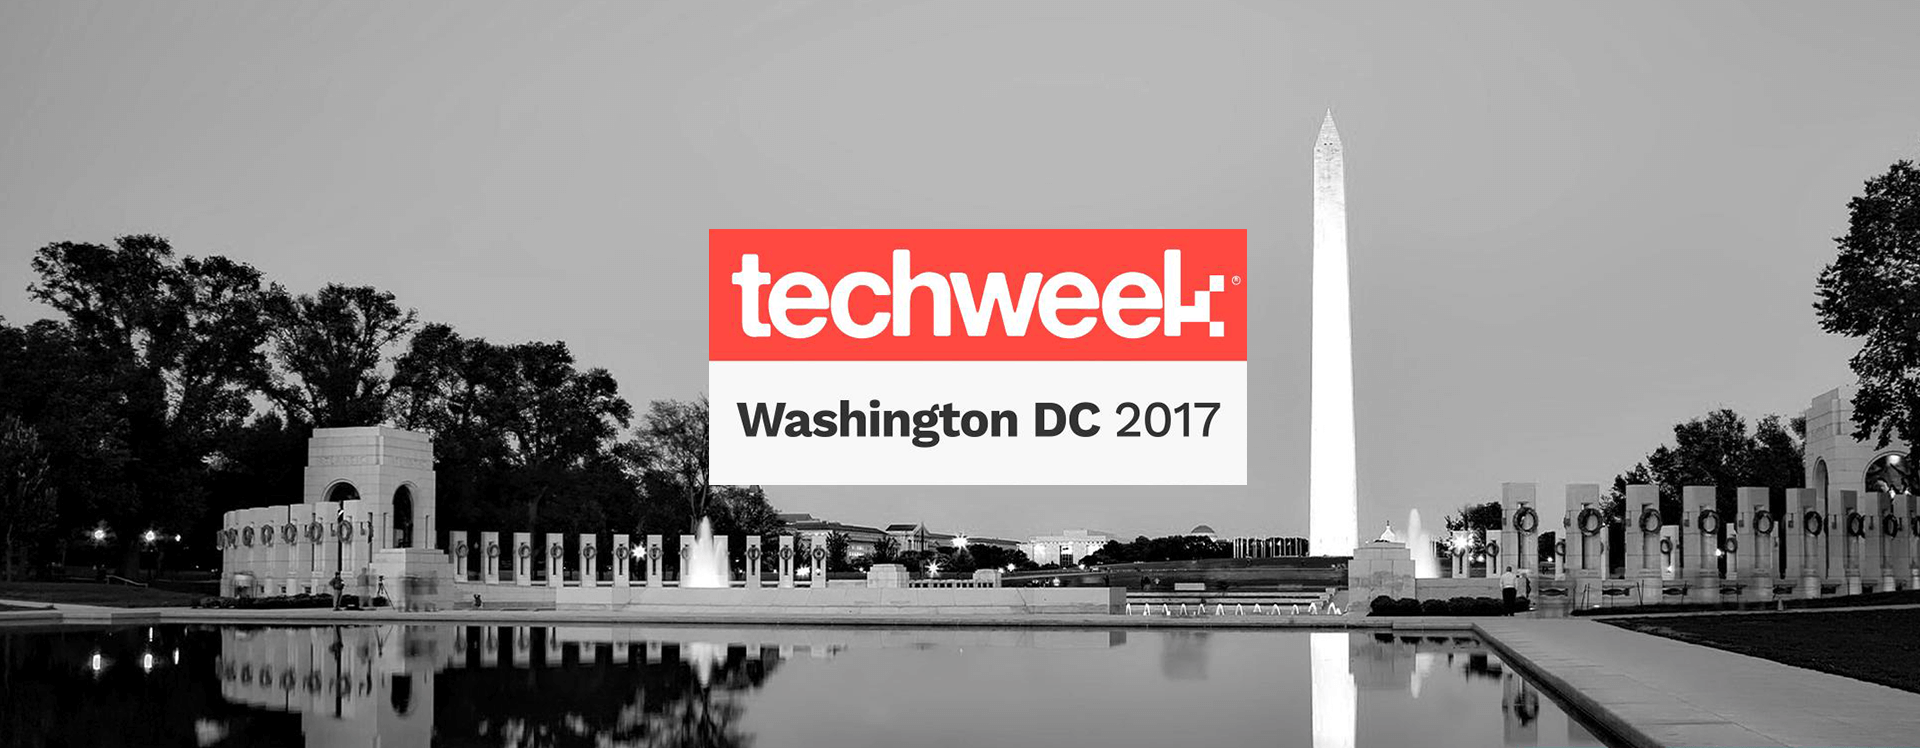 Techweek Logo, Washington DC, 2017